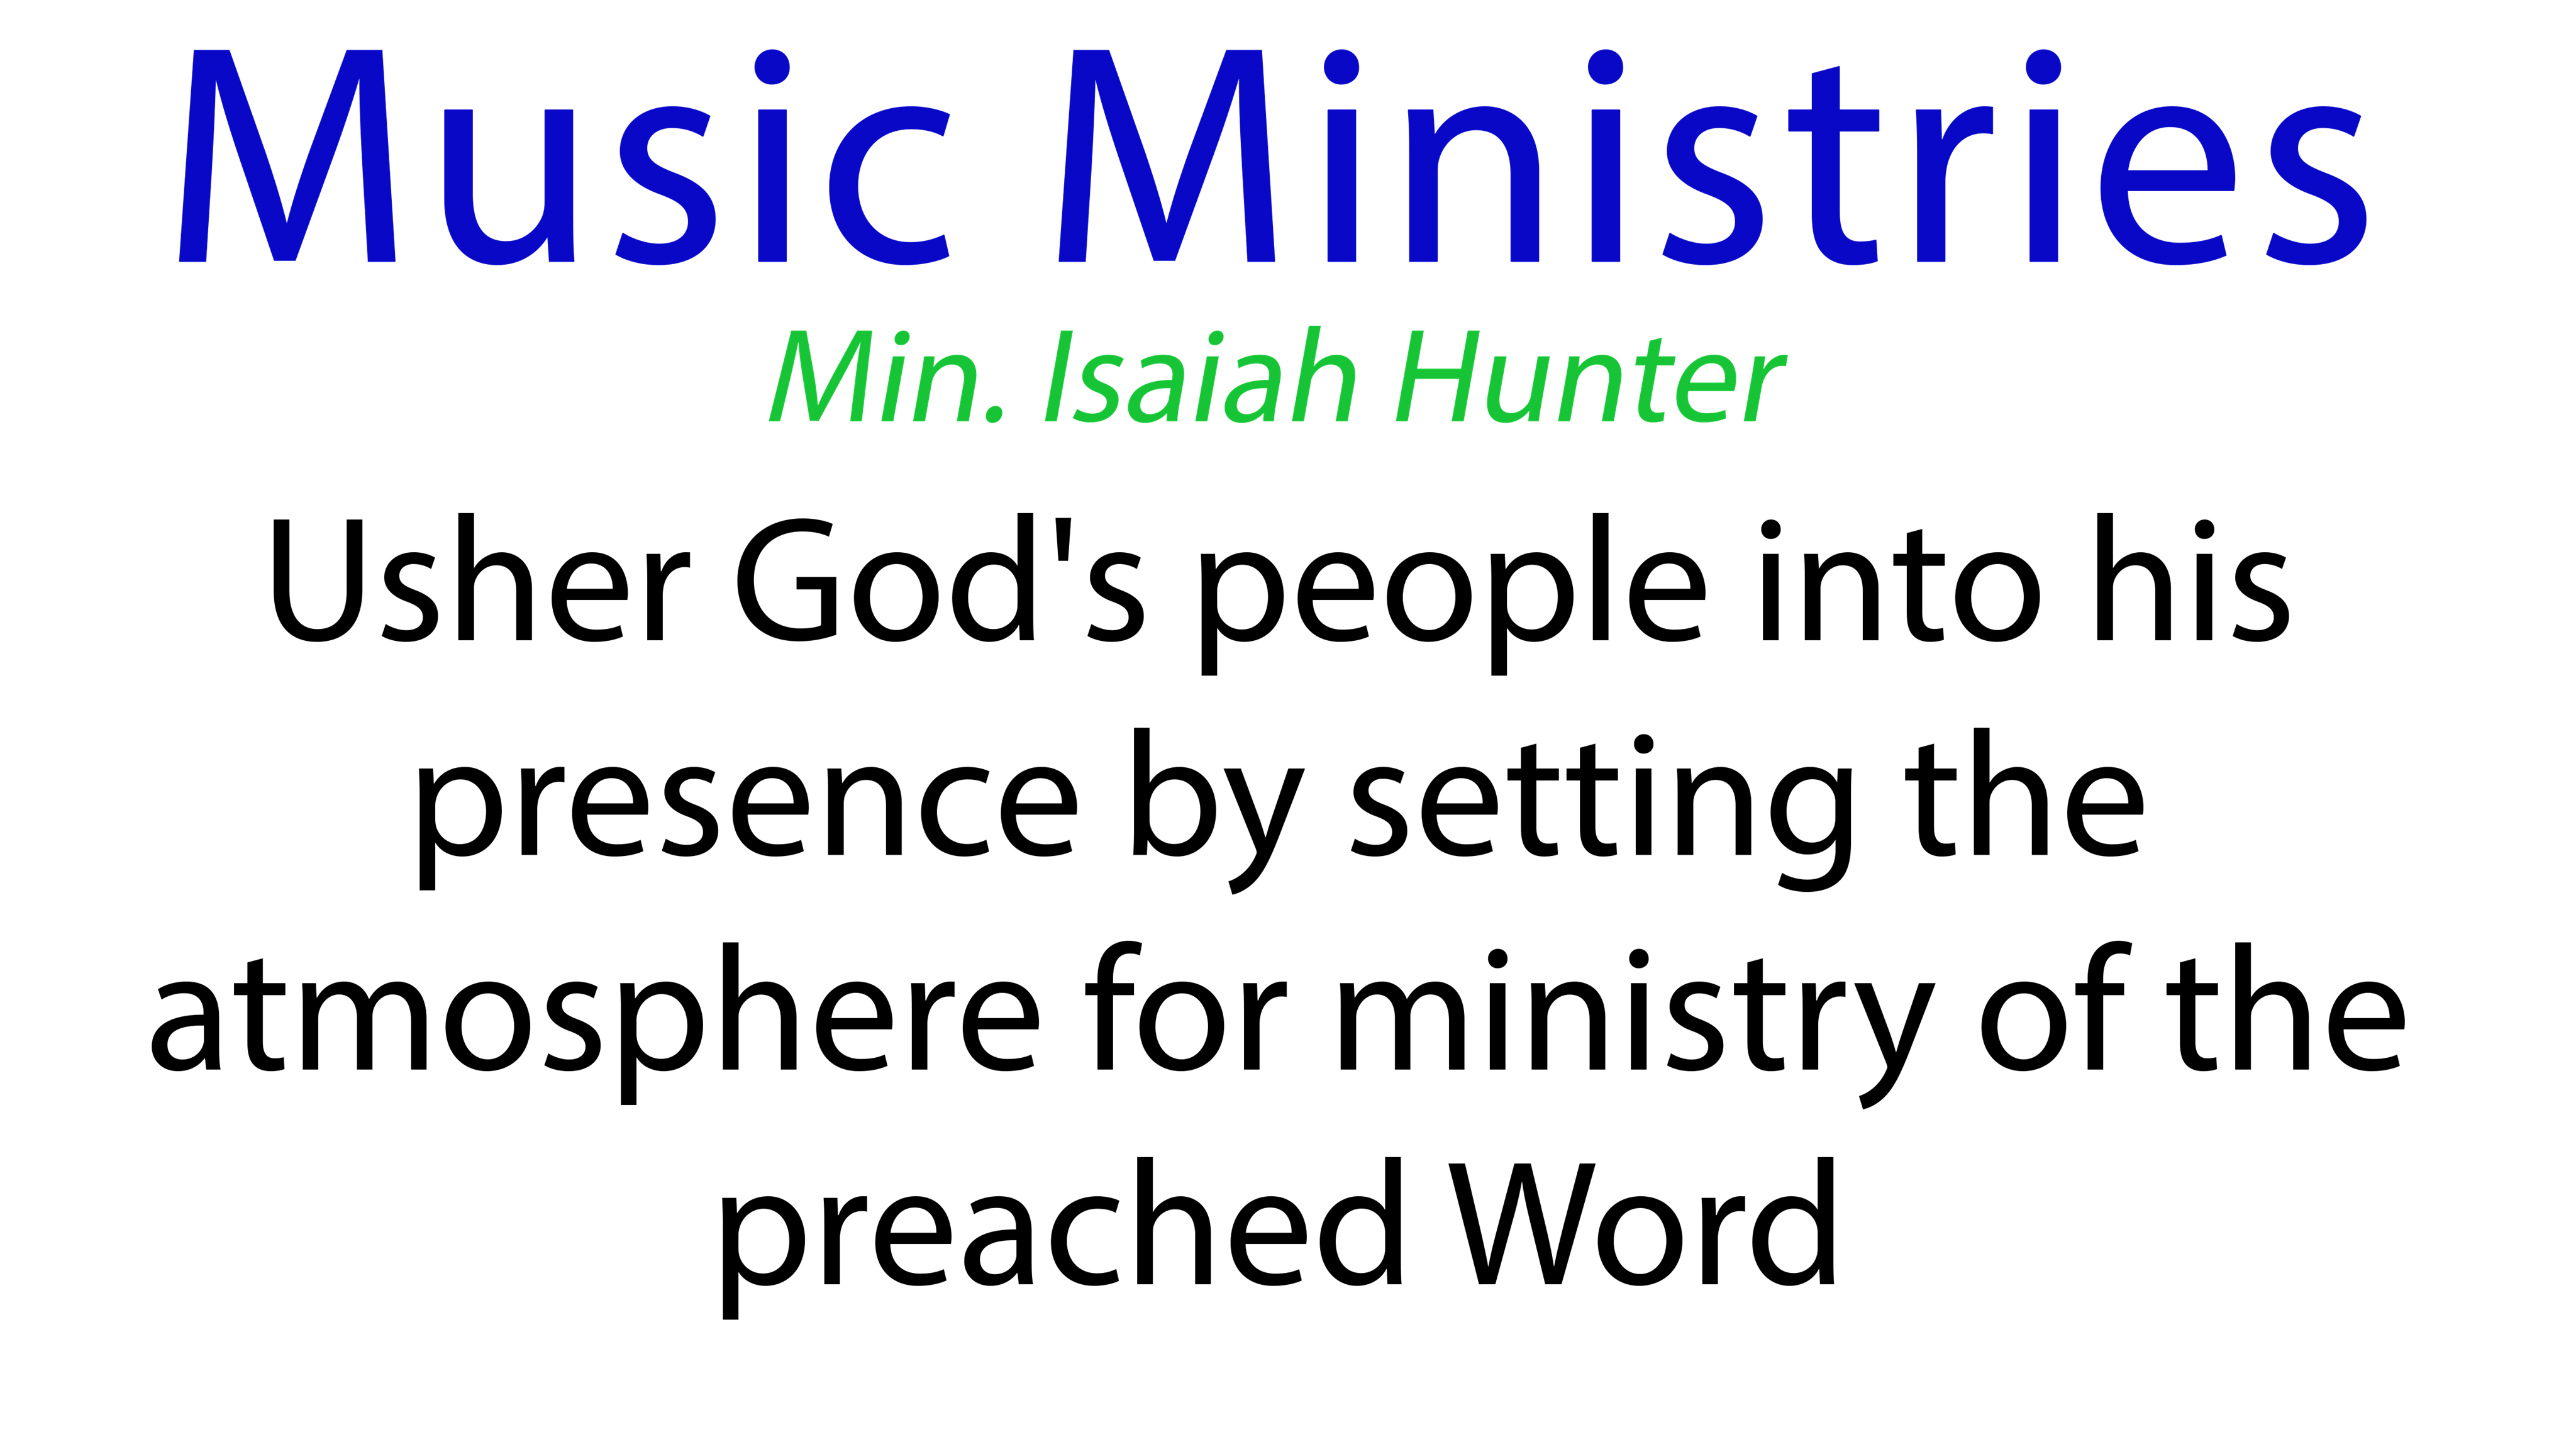 Music Ministries